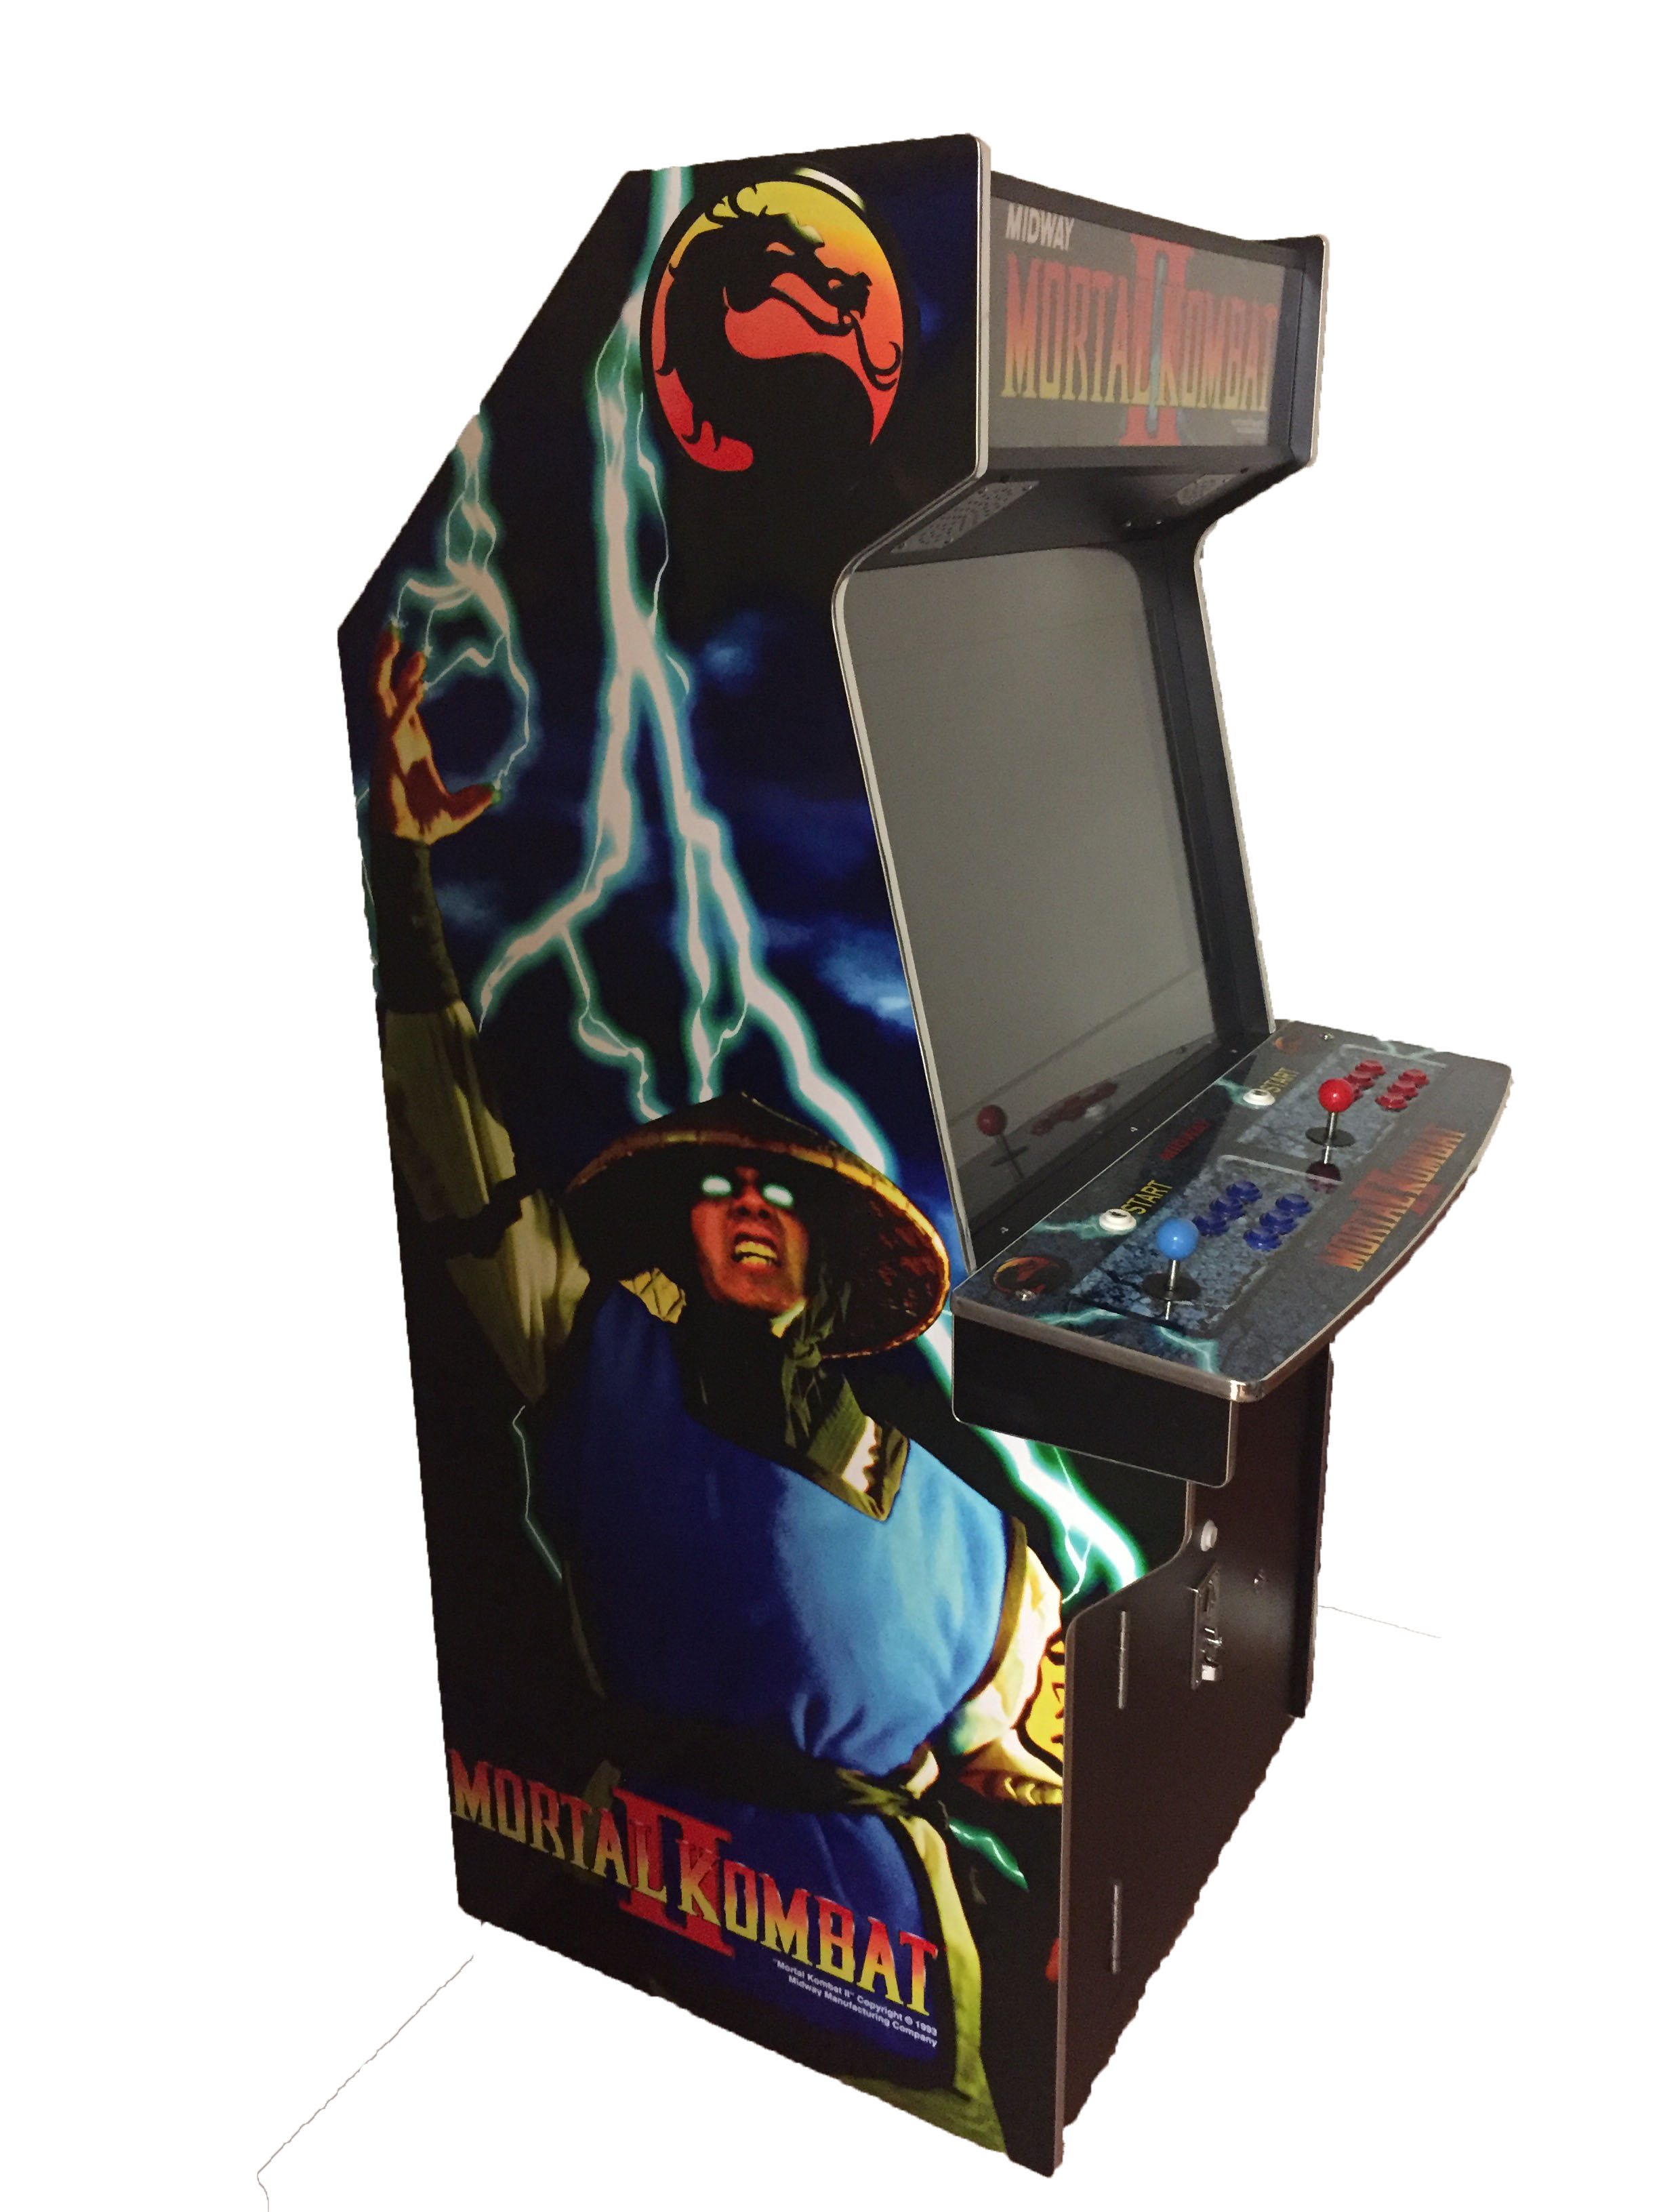 Arcade Rewind 2100 in 1 Upright Arcade Machine Mortal Kombat 2